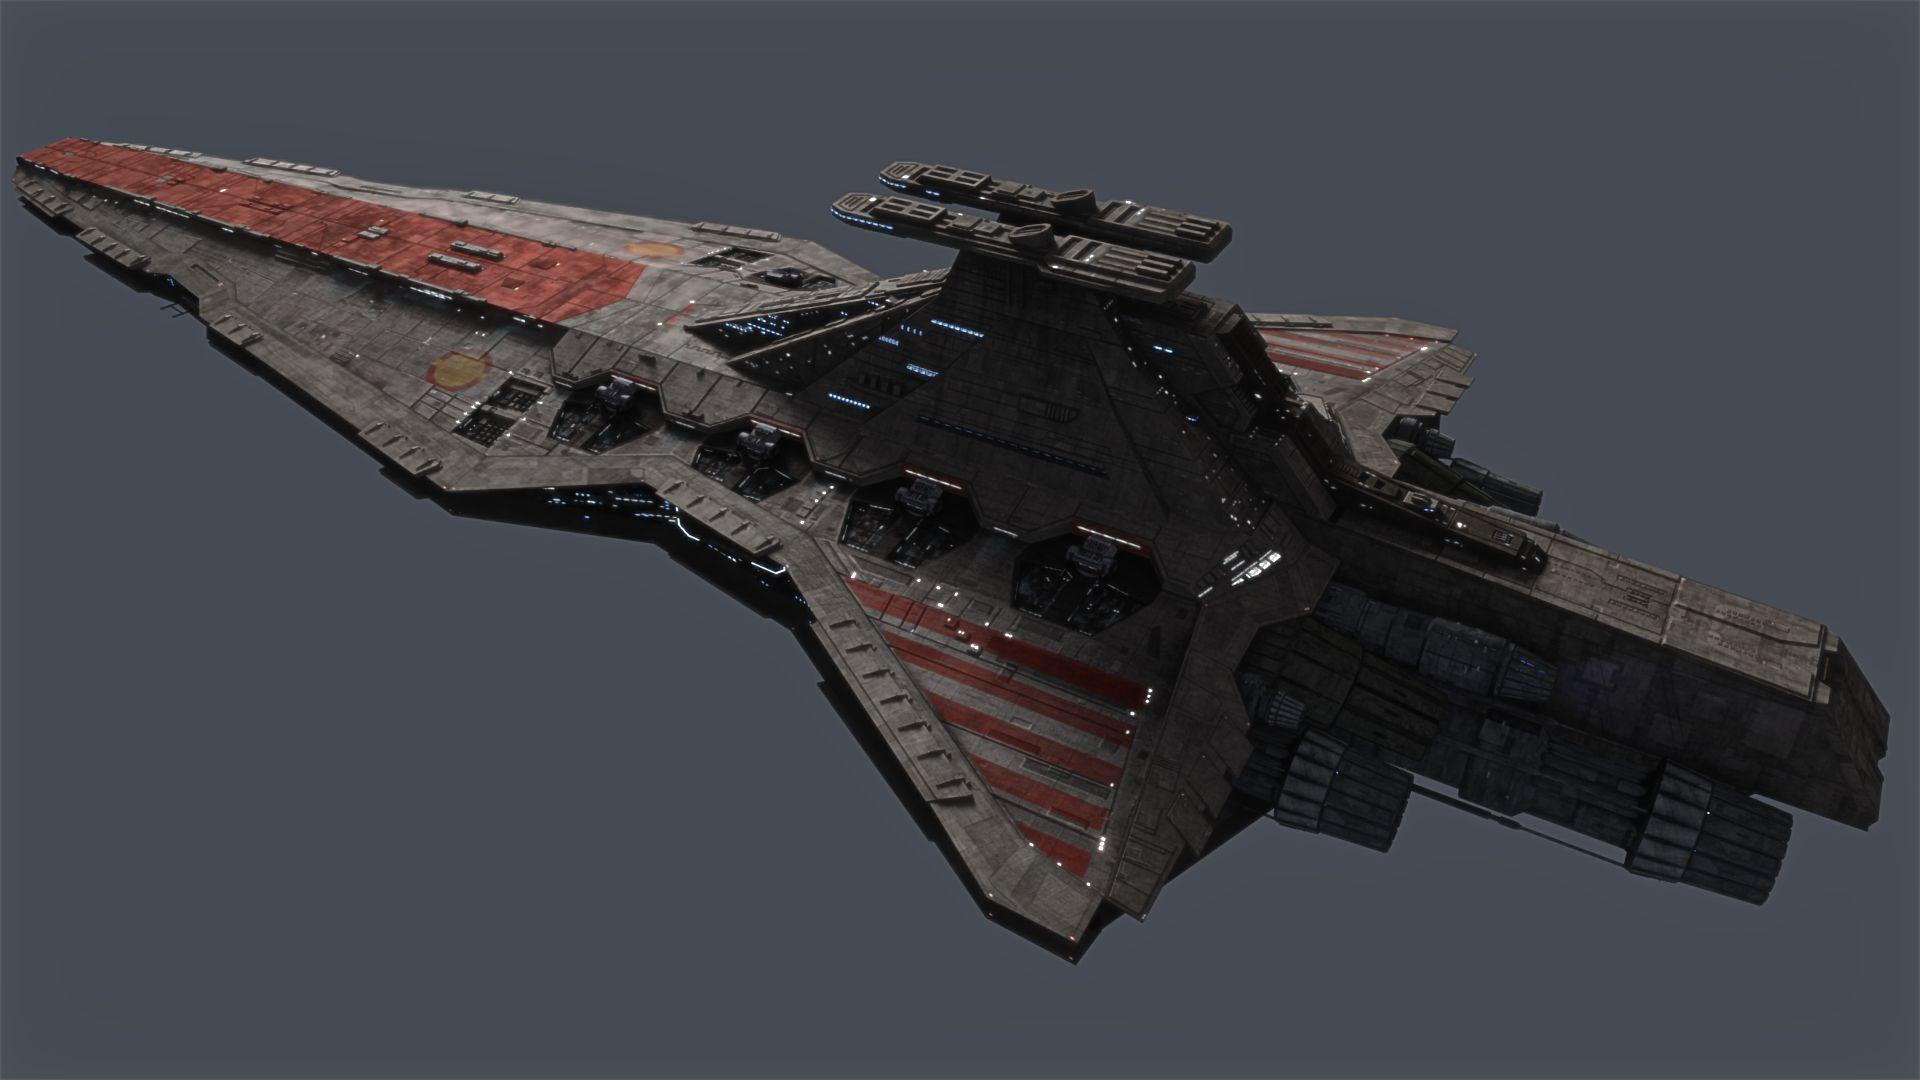 Venator Class Star Destroyer (Star Wars) V. Warlock Class